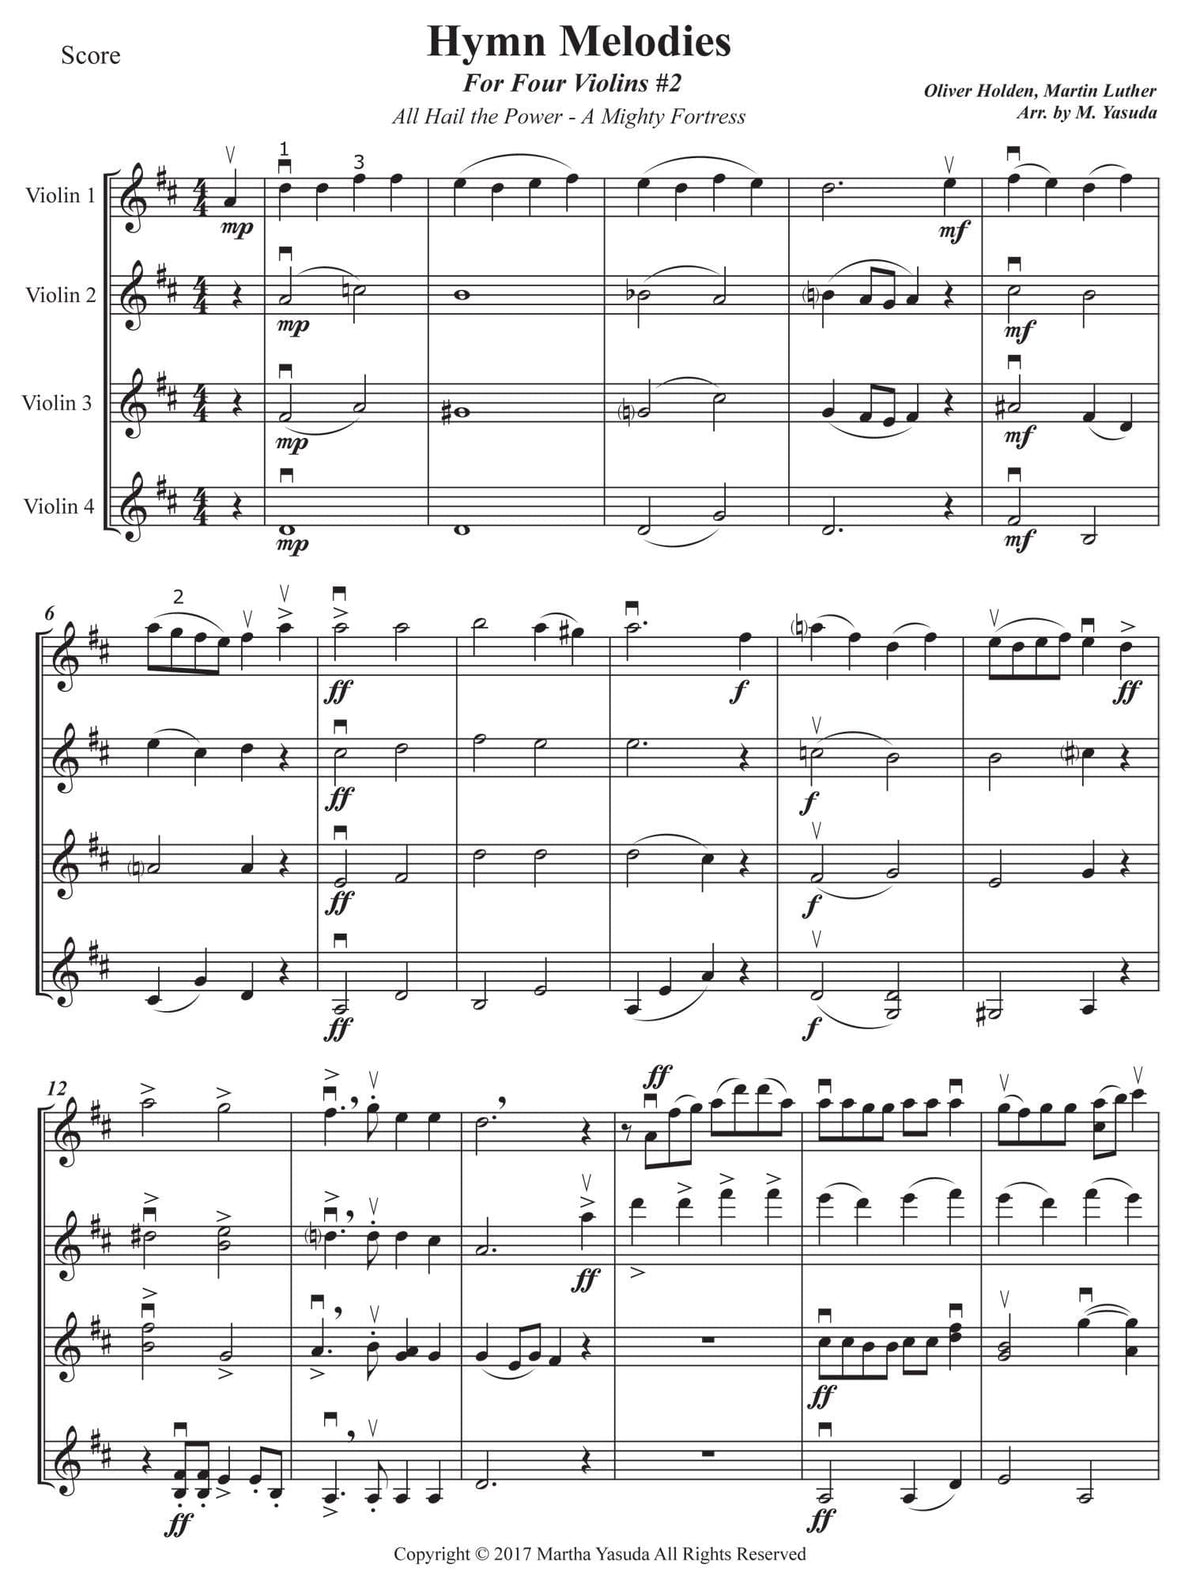 Yasuda, Martha - Hymn Melodies For Four Violins, Volume II - Digital Download